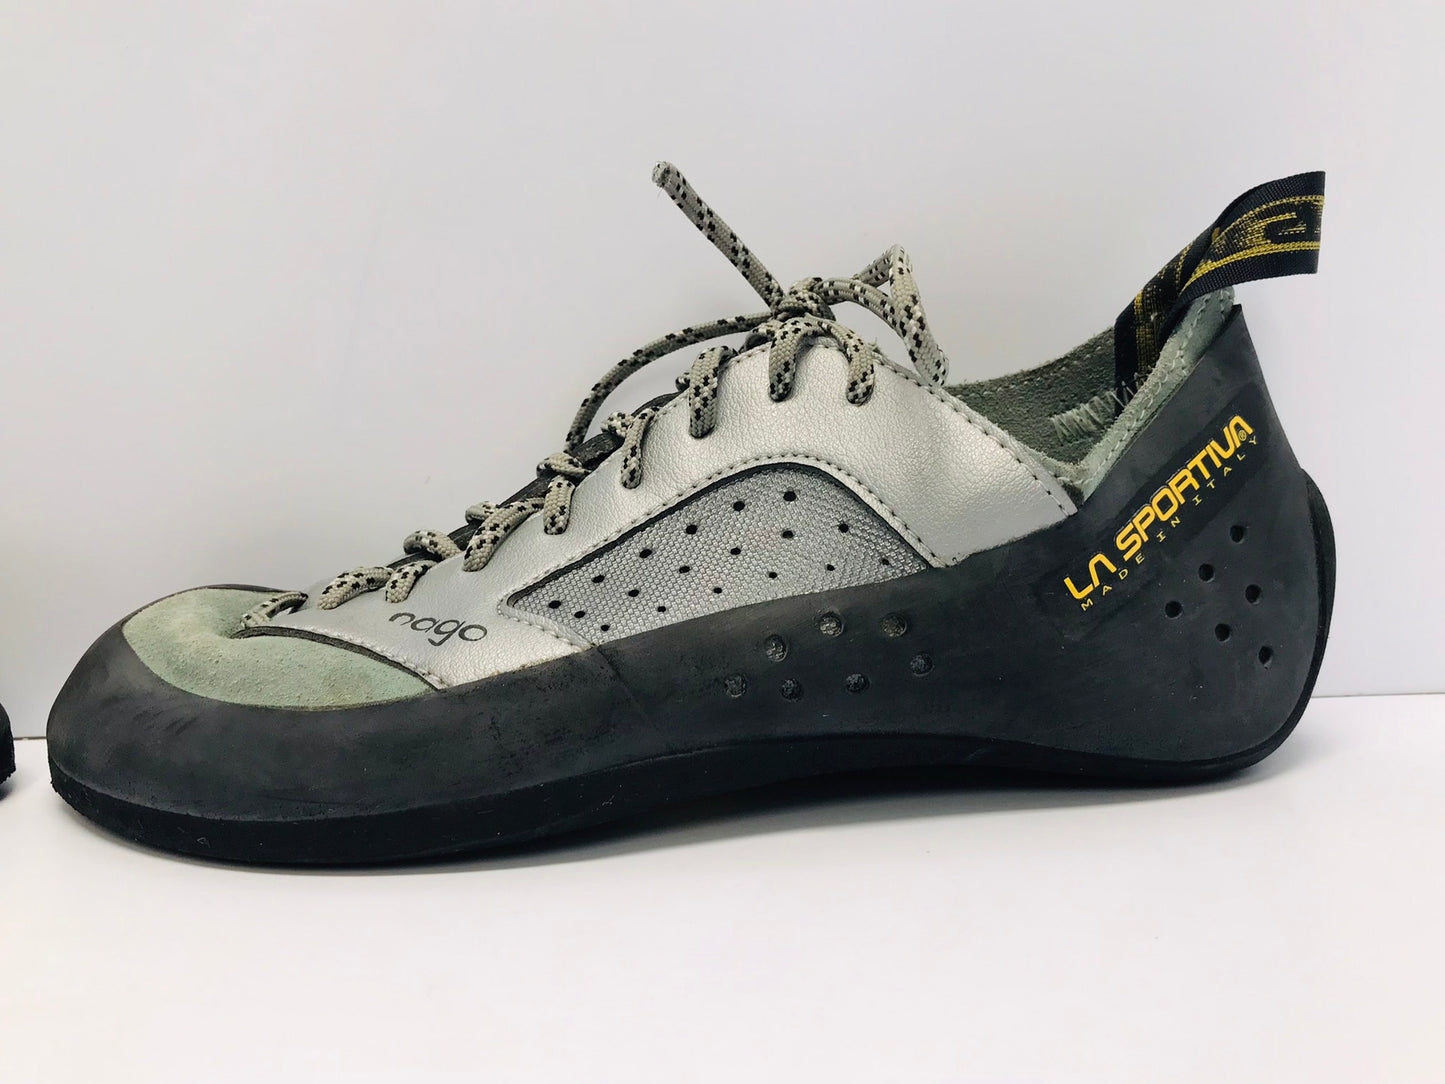 Rock Climbing Shoes Ladies La Sportiva Size 8 Grey Like New